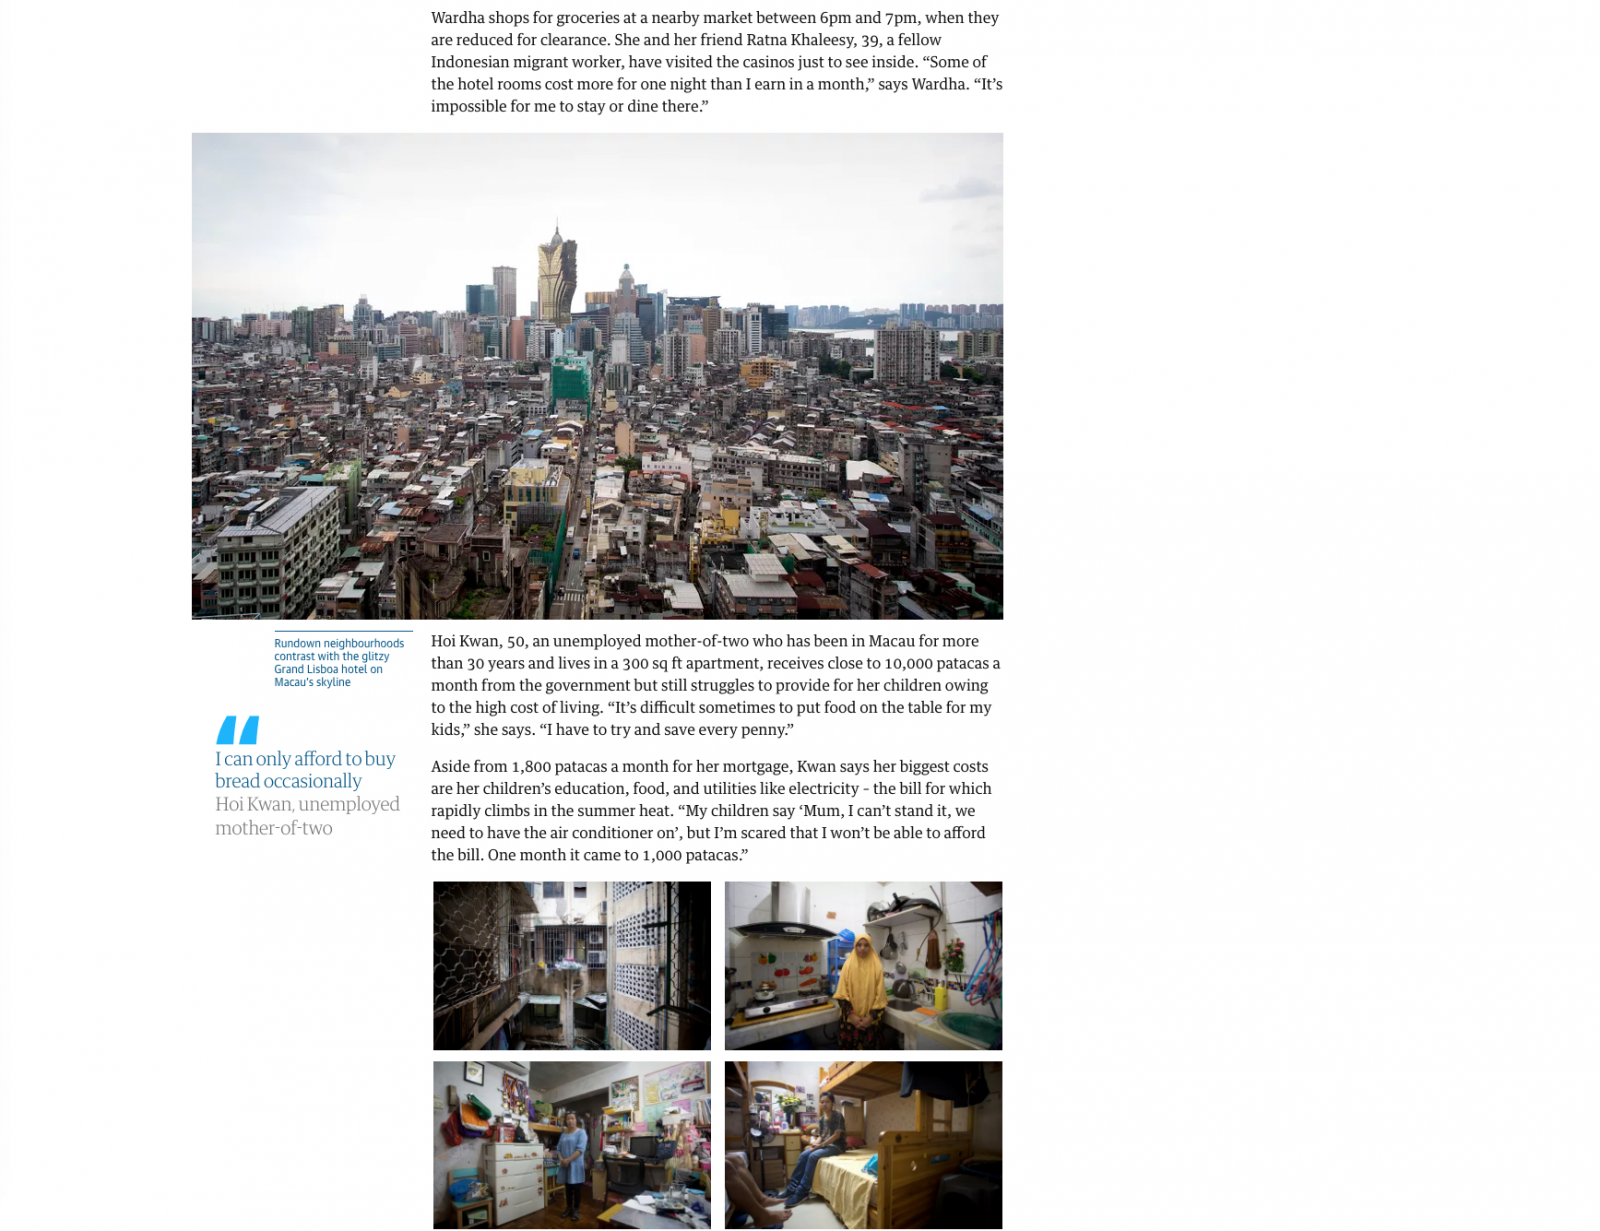 Multibillion-dollar Macau: a city of glitz and grit "“ photo essay - 